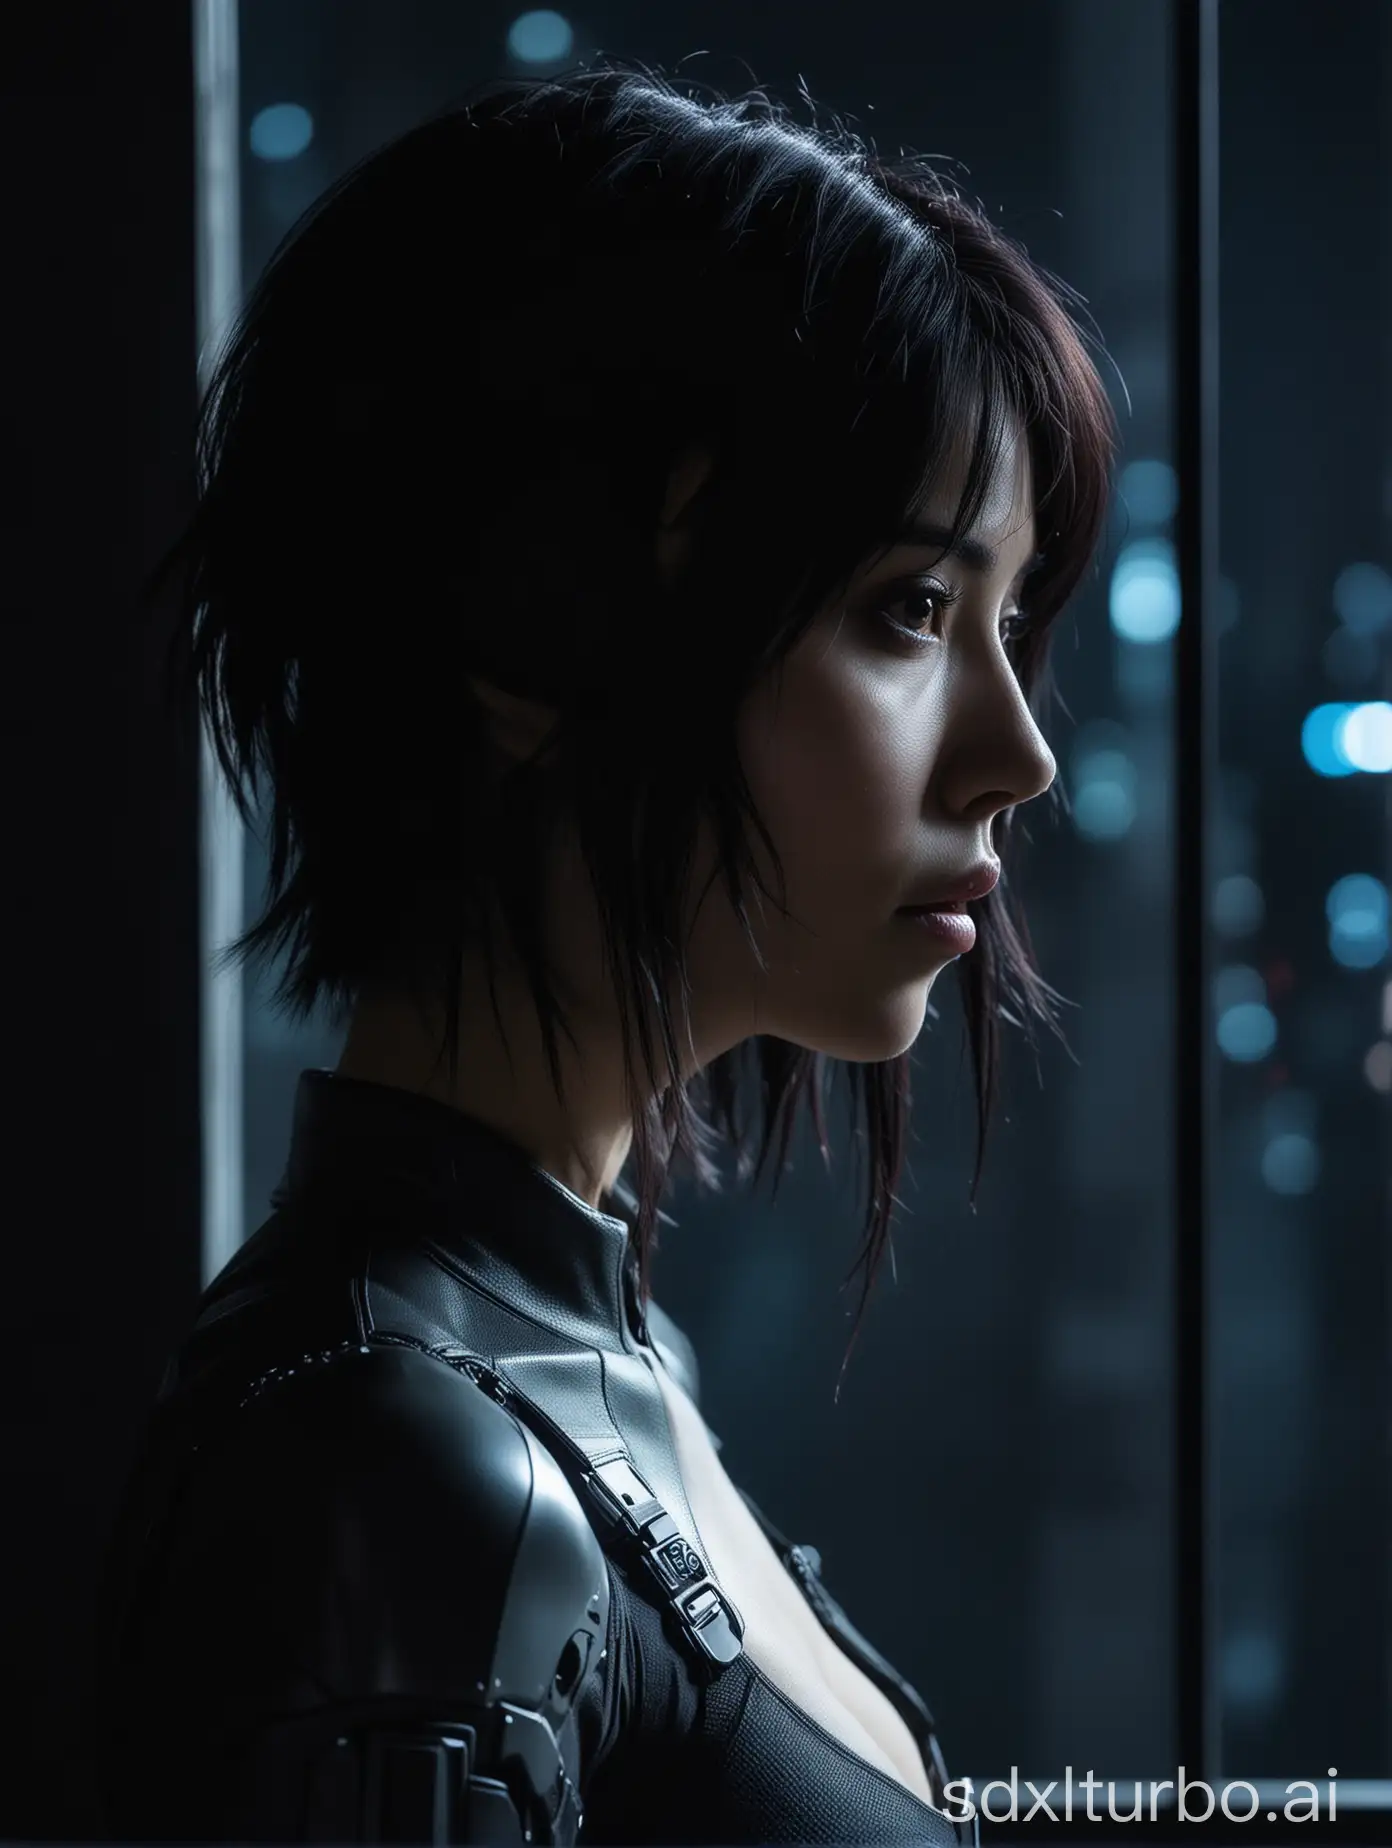 Sonoya-Mizuno-as-Motoko-Kusanagi-Cyberpunk-Silhouette-in-Nighttime-Scene